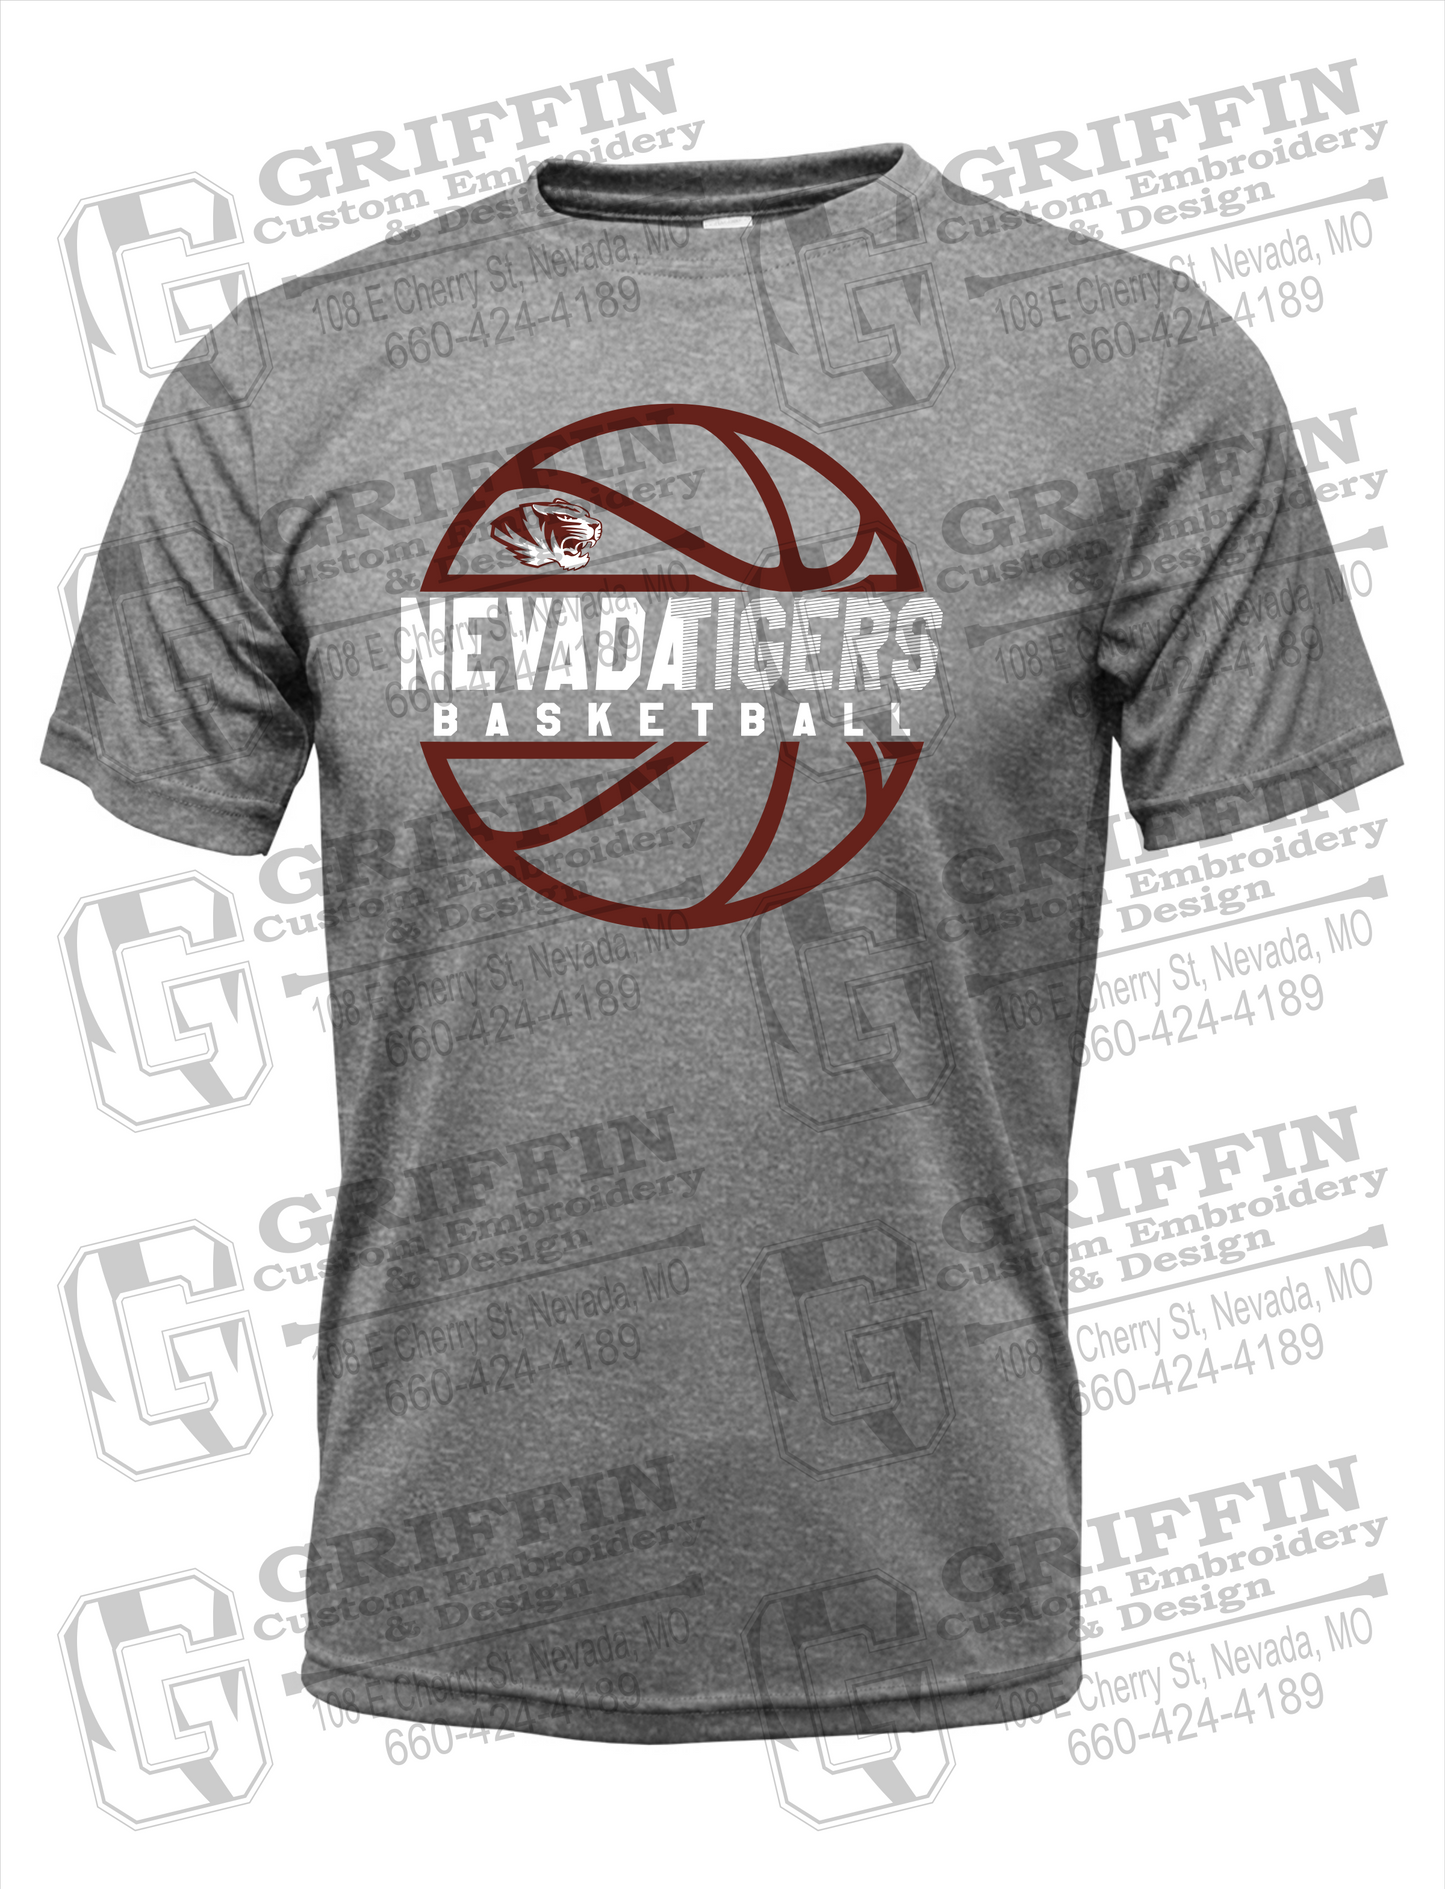 Nevada Tigers 19-V Dry-Fit T-Shirt - Basketball